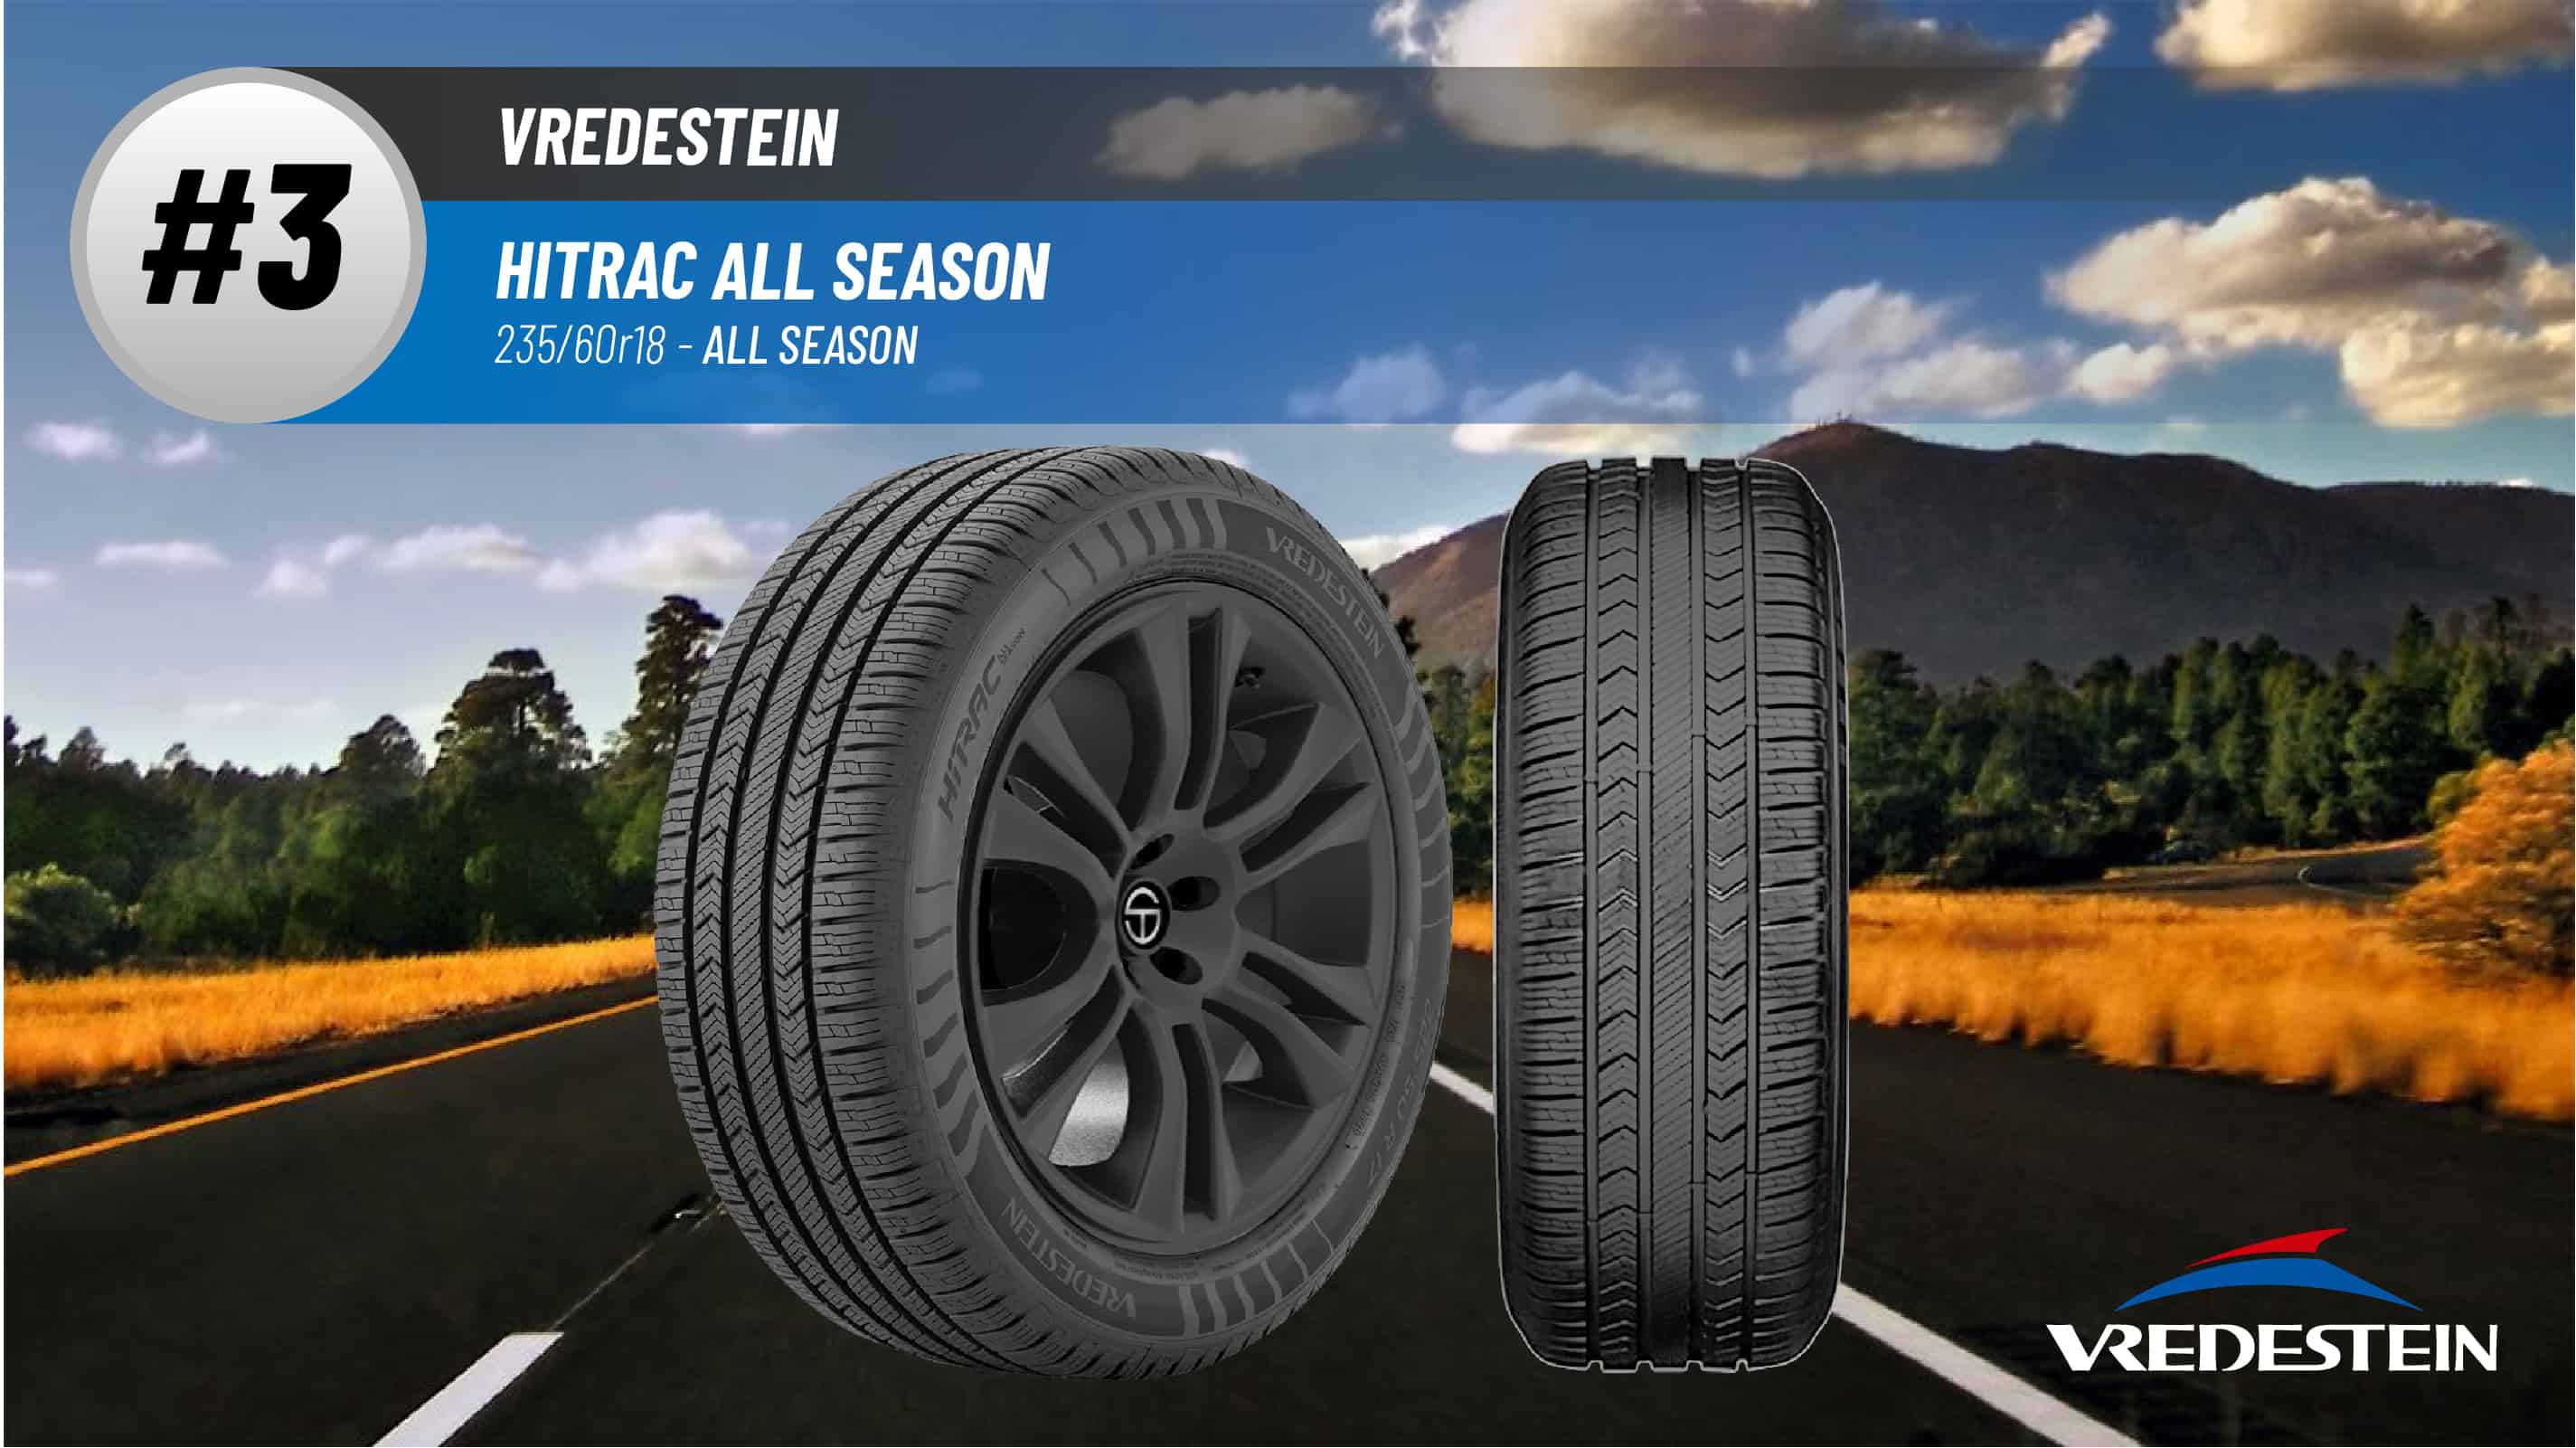 Top #3 All Season Tires: Vredestein Hitrac All Season –best 235/60r18